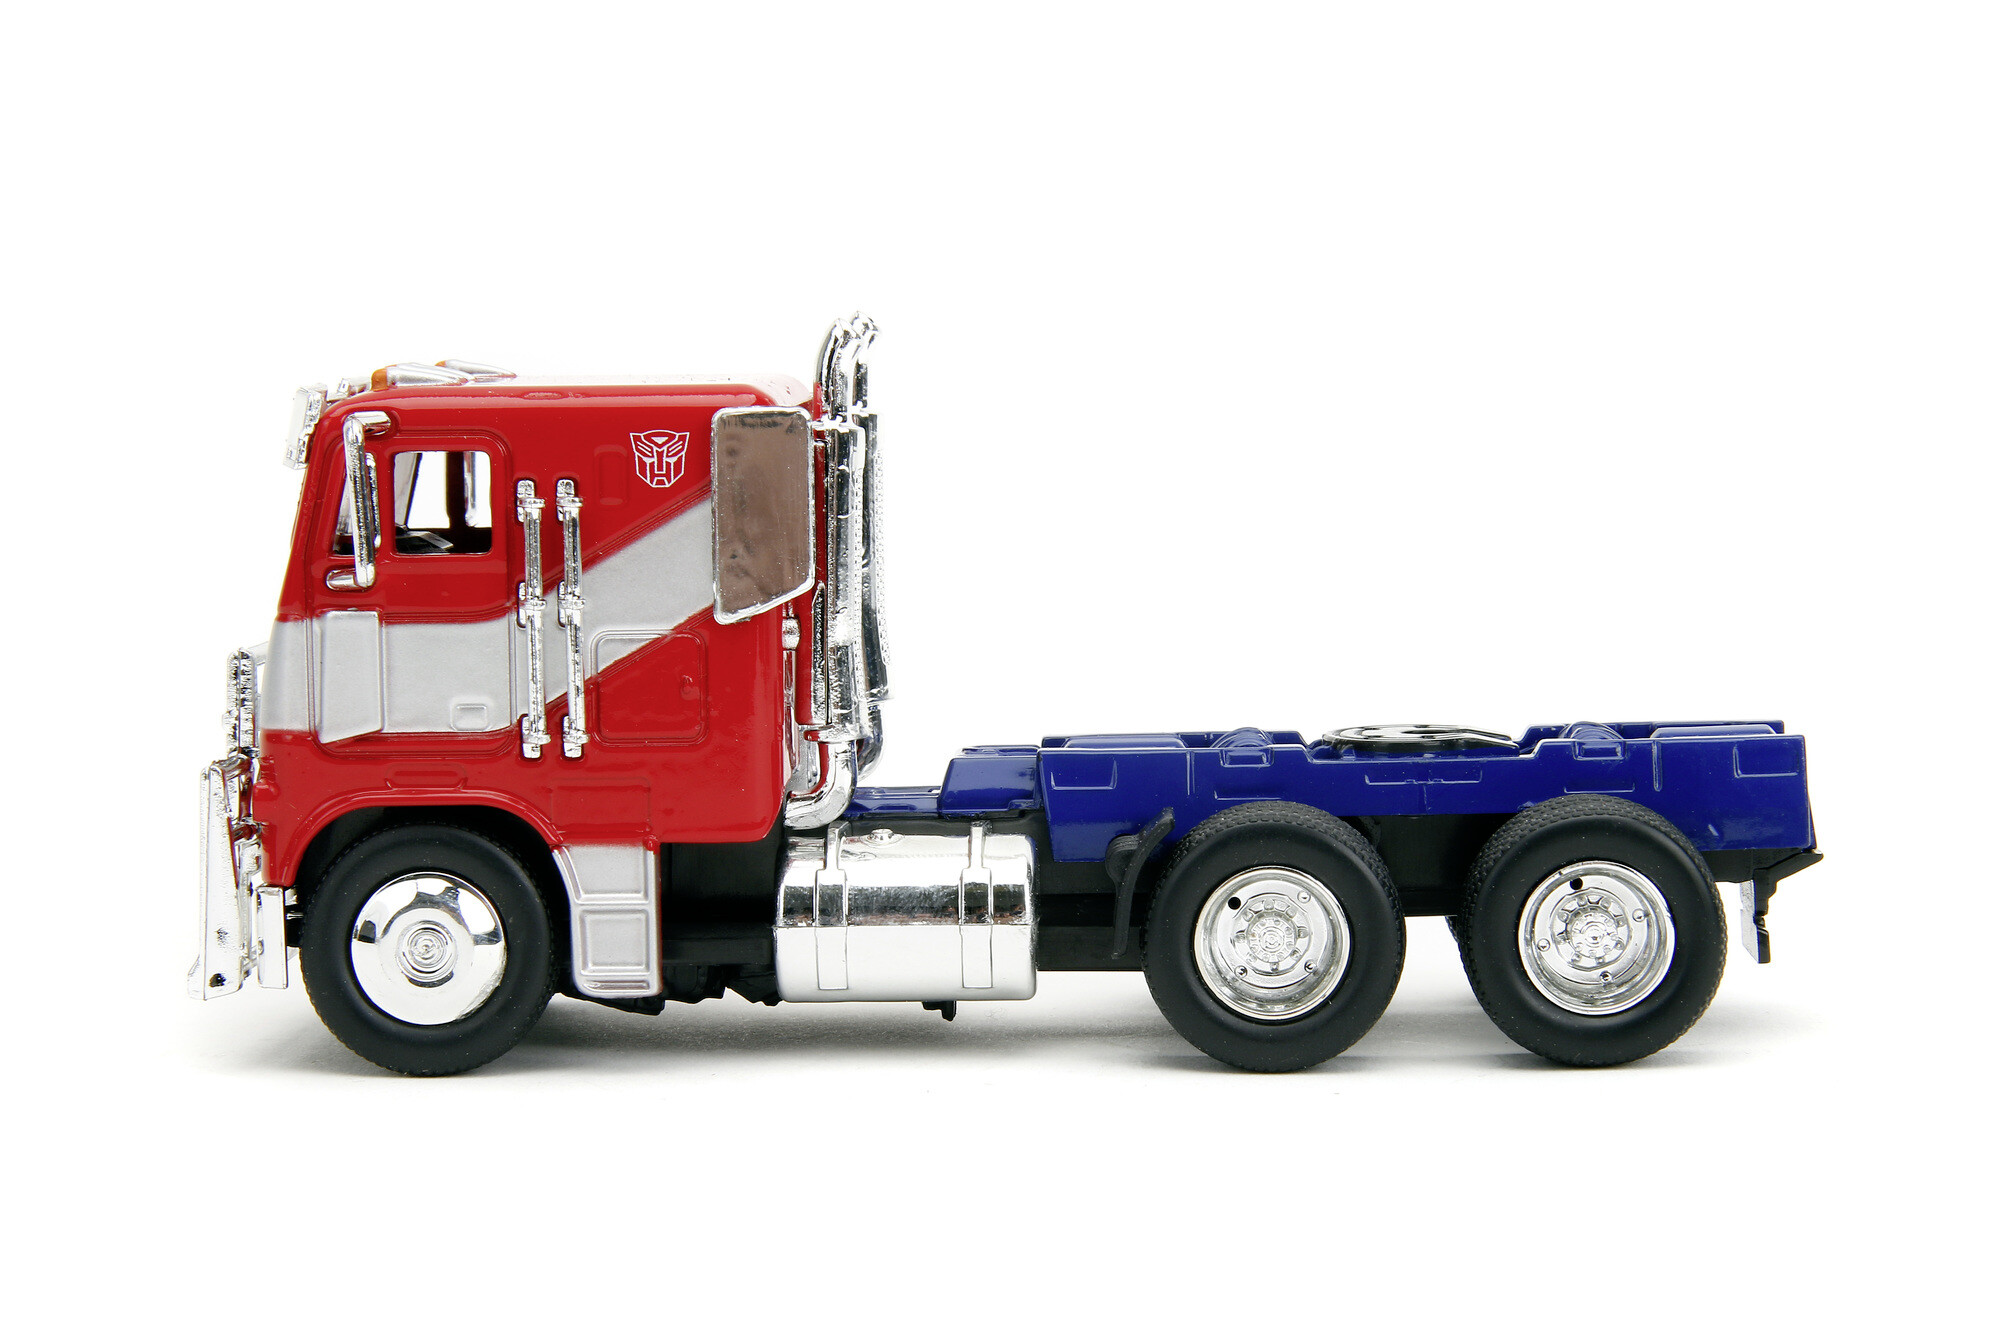 Jada- transformers t7 optimus prime truck die-cast, in scala 1:32 - 